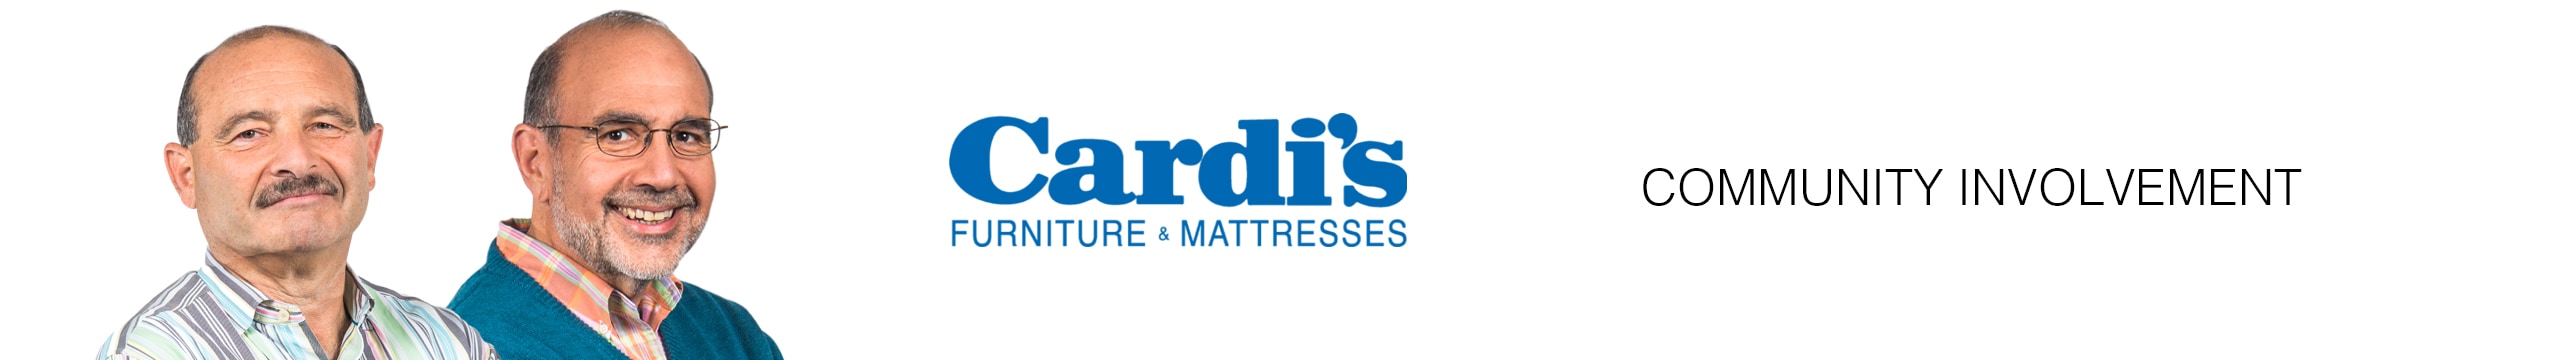 Cardi's Furniture & Mattresses Community Involvement